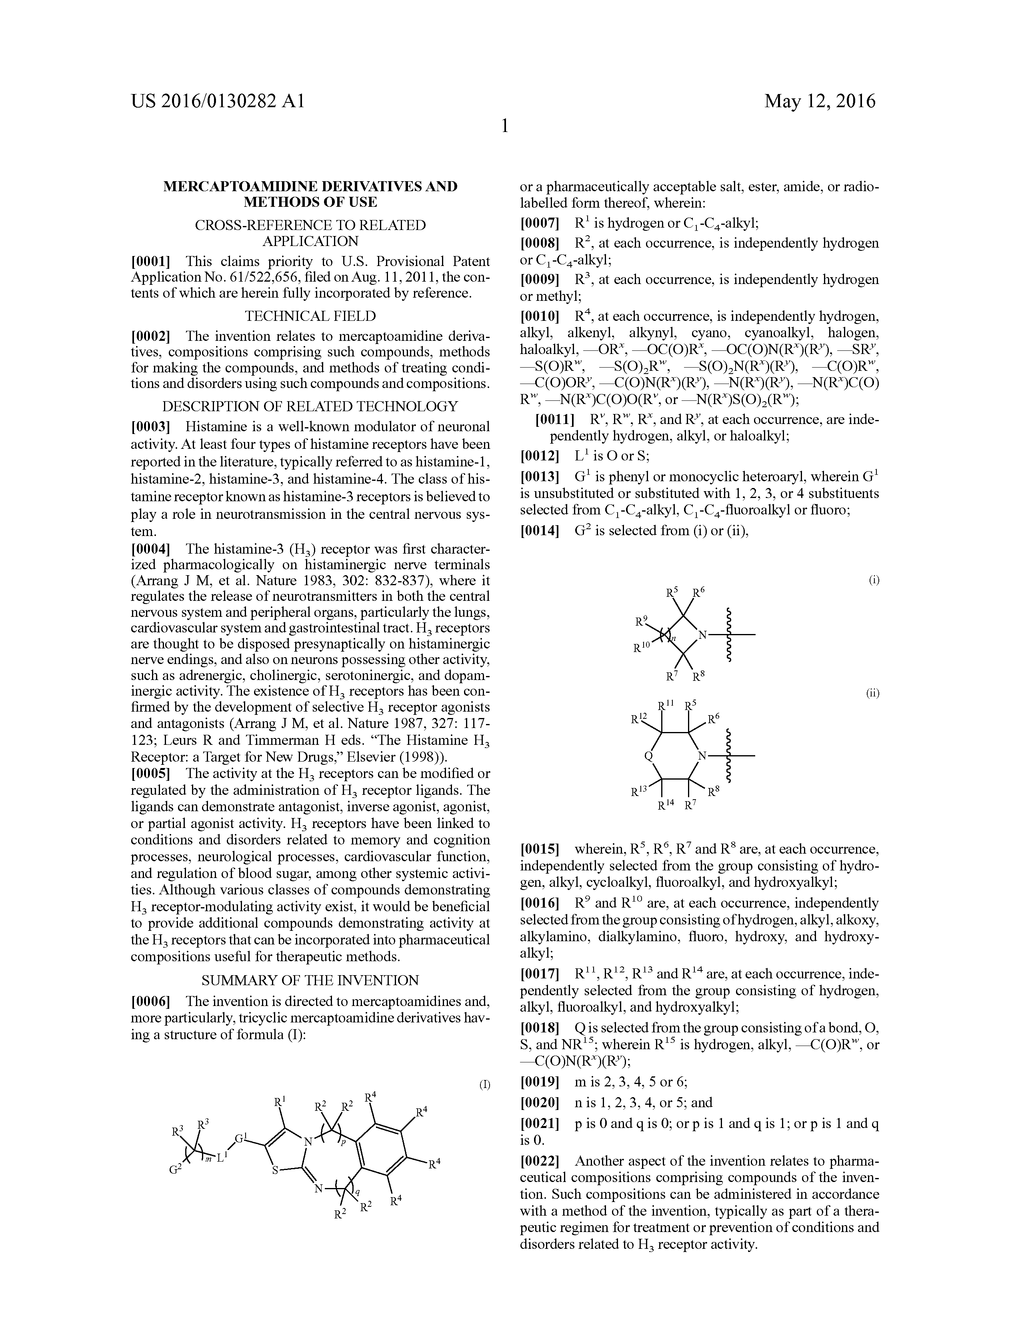 MERCAPTOAMIDINE DERIVATIVES AND METHODS OF USE - diagram, schematic, and image 02